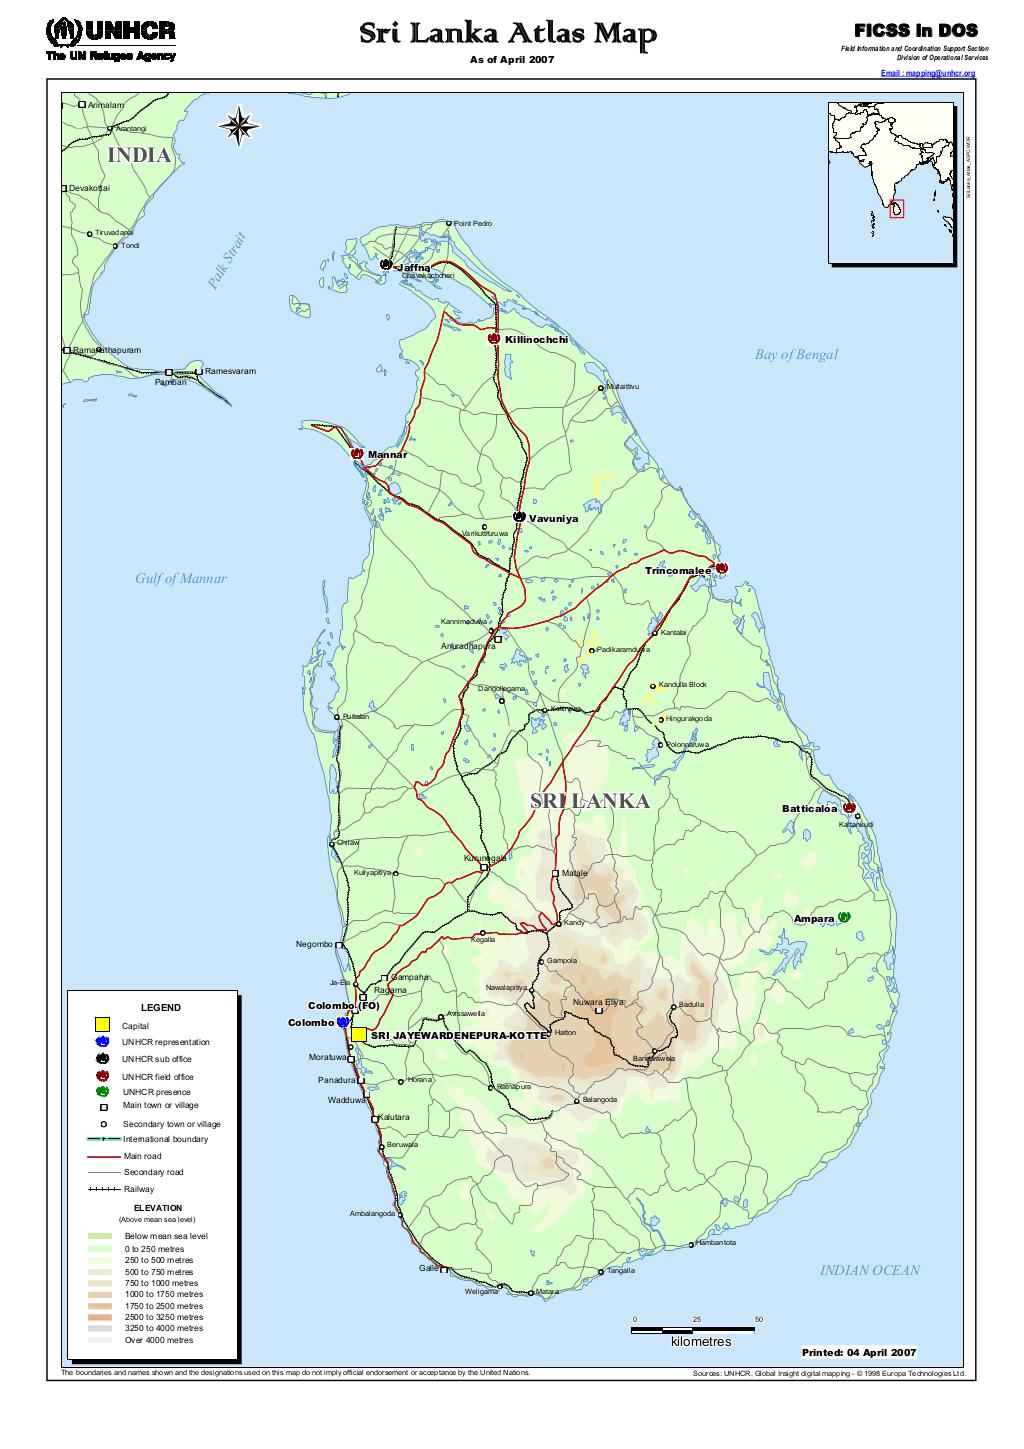 Document - Sri Lanka Atlas Map - April 2007